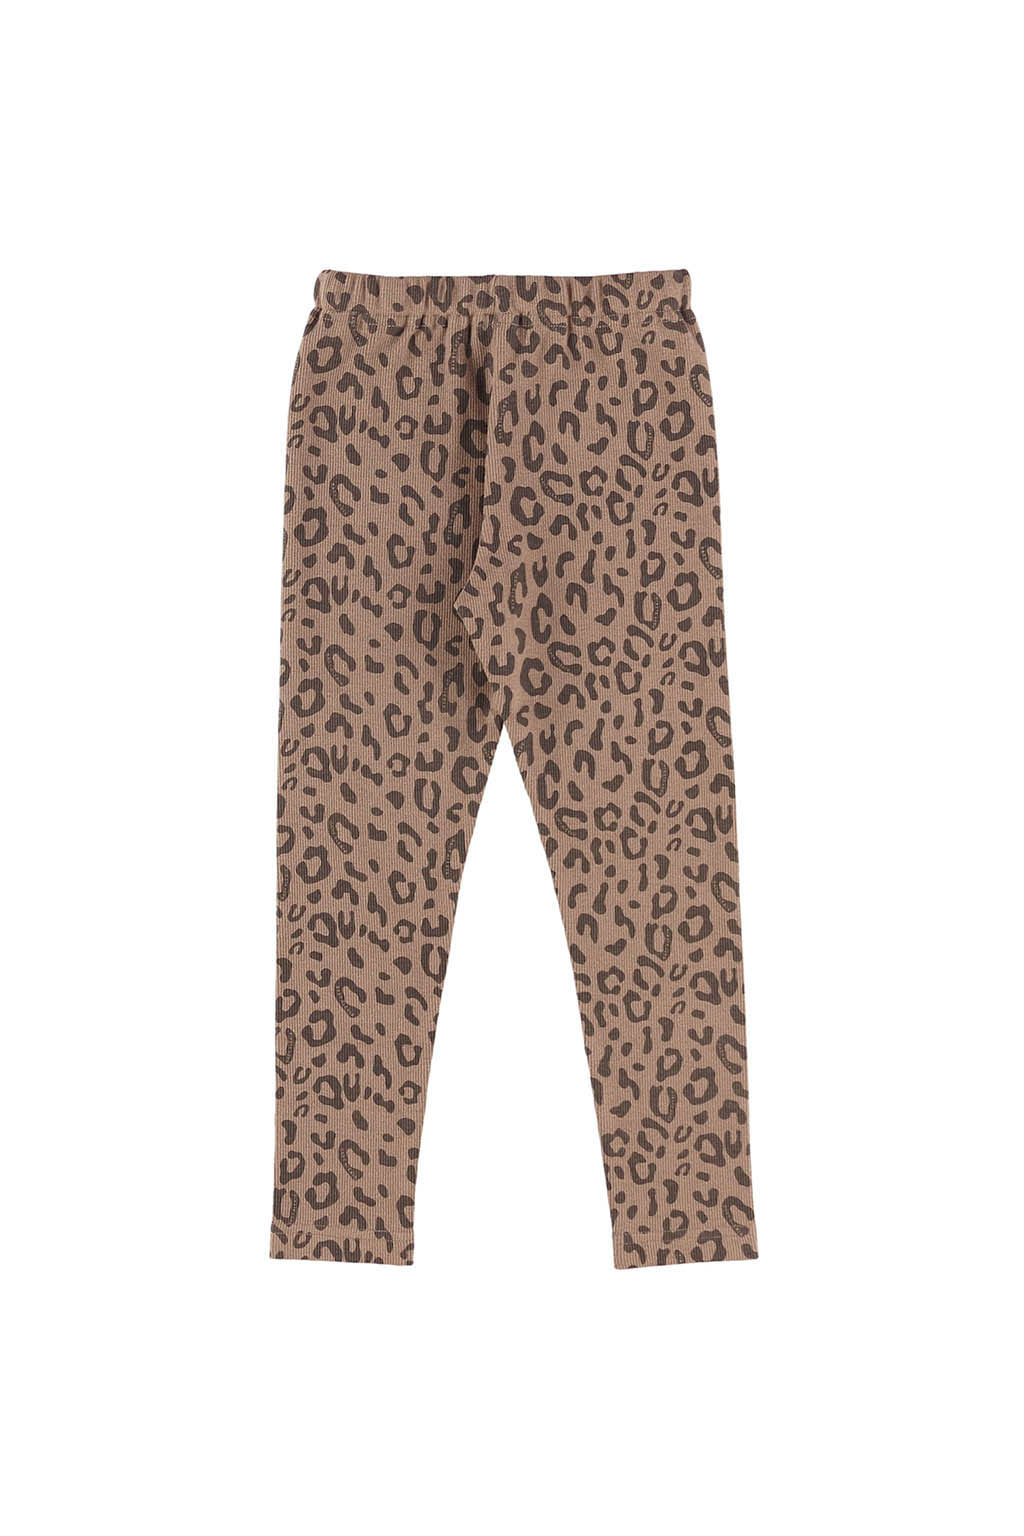 baby-alexia-leopard-leggings-brown-06